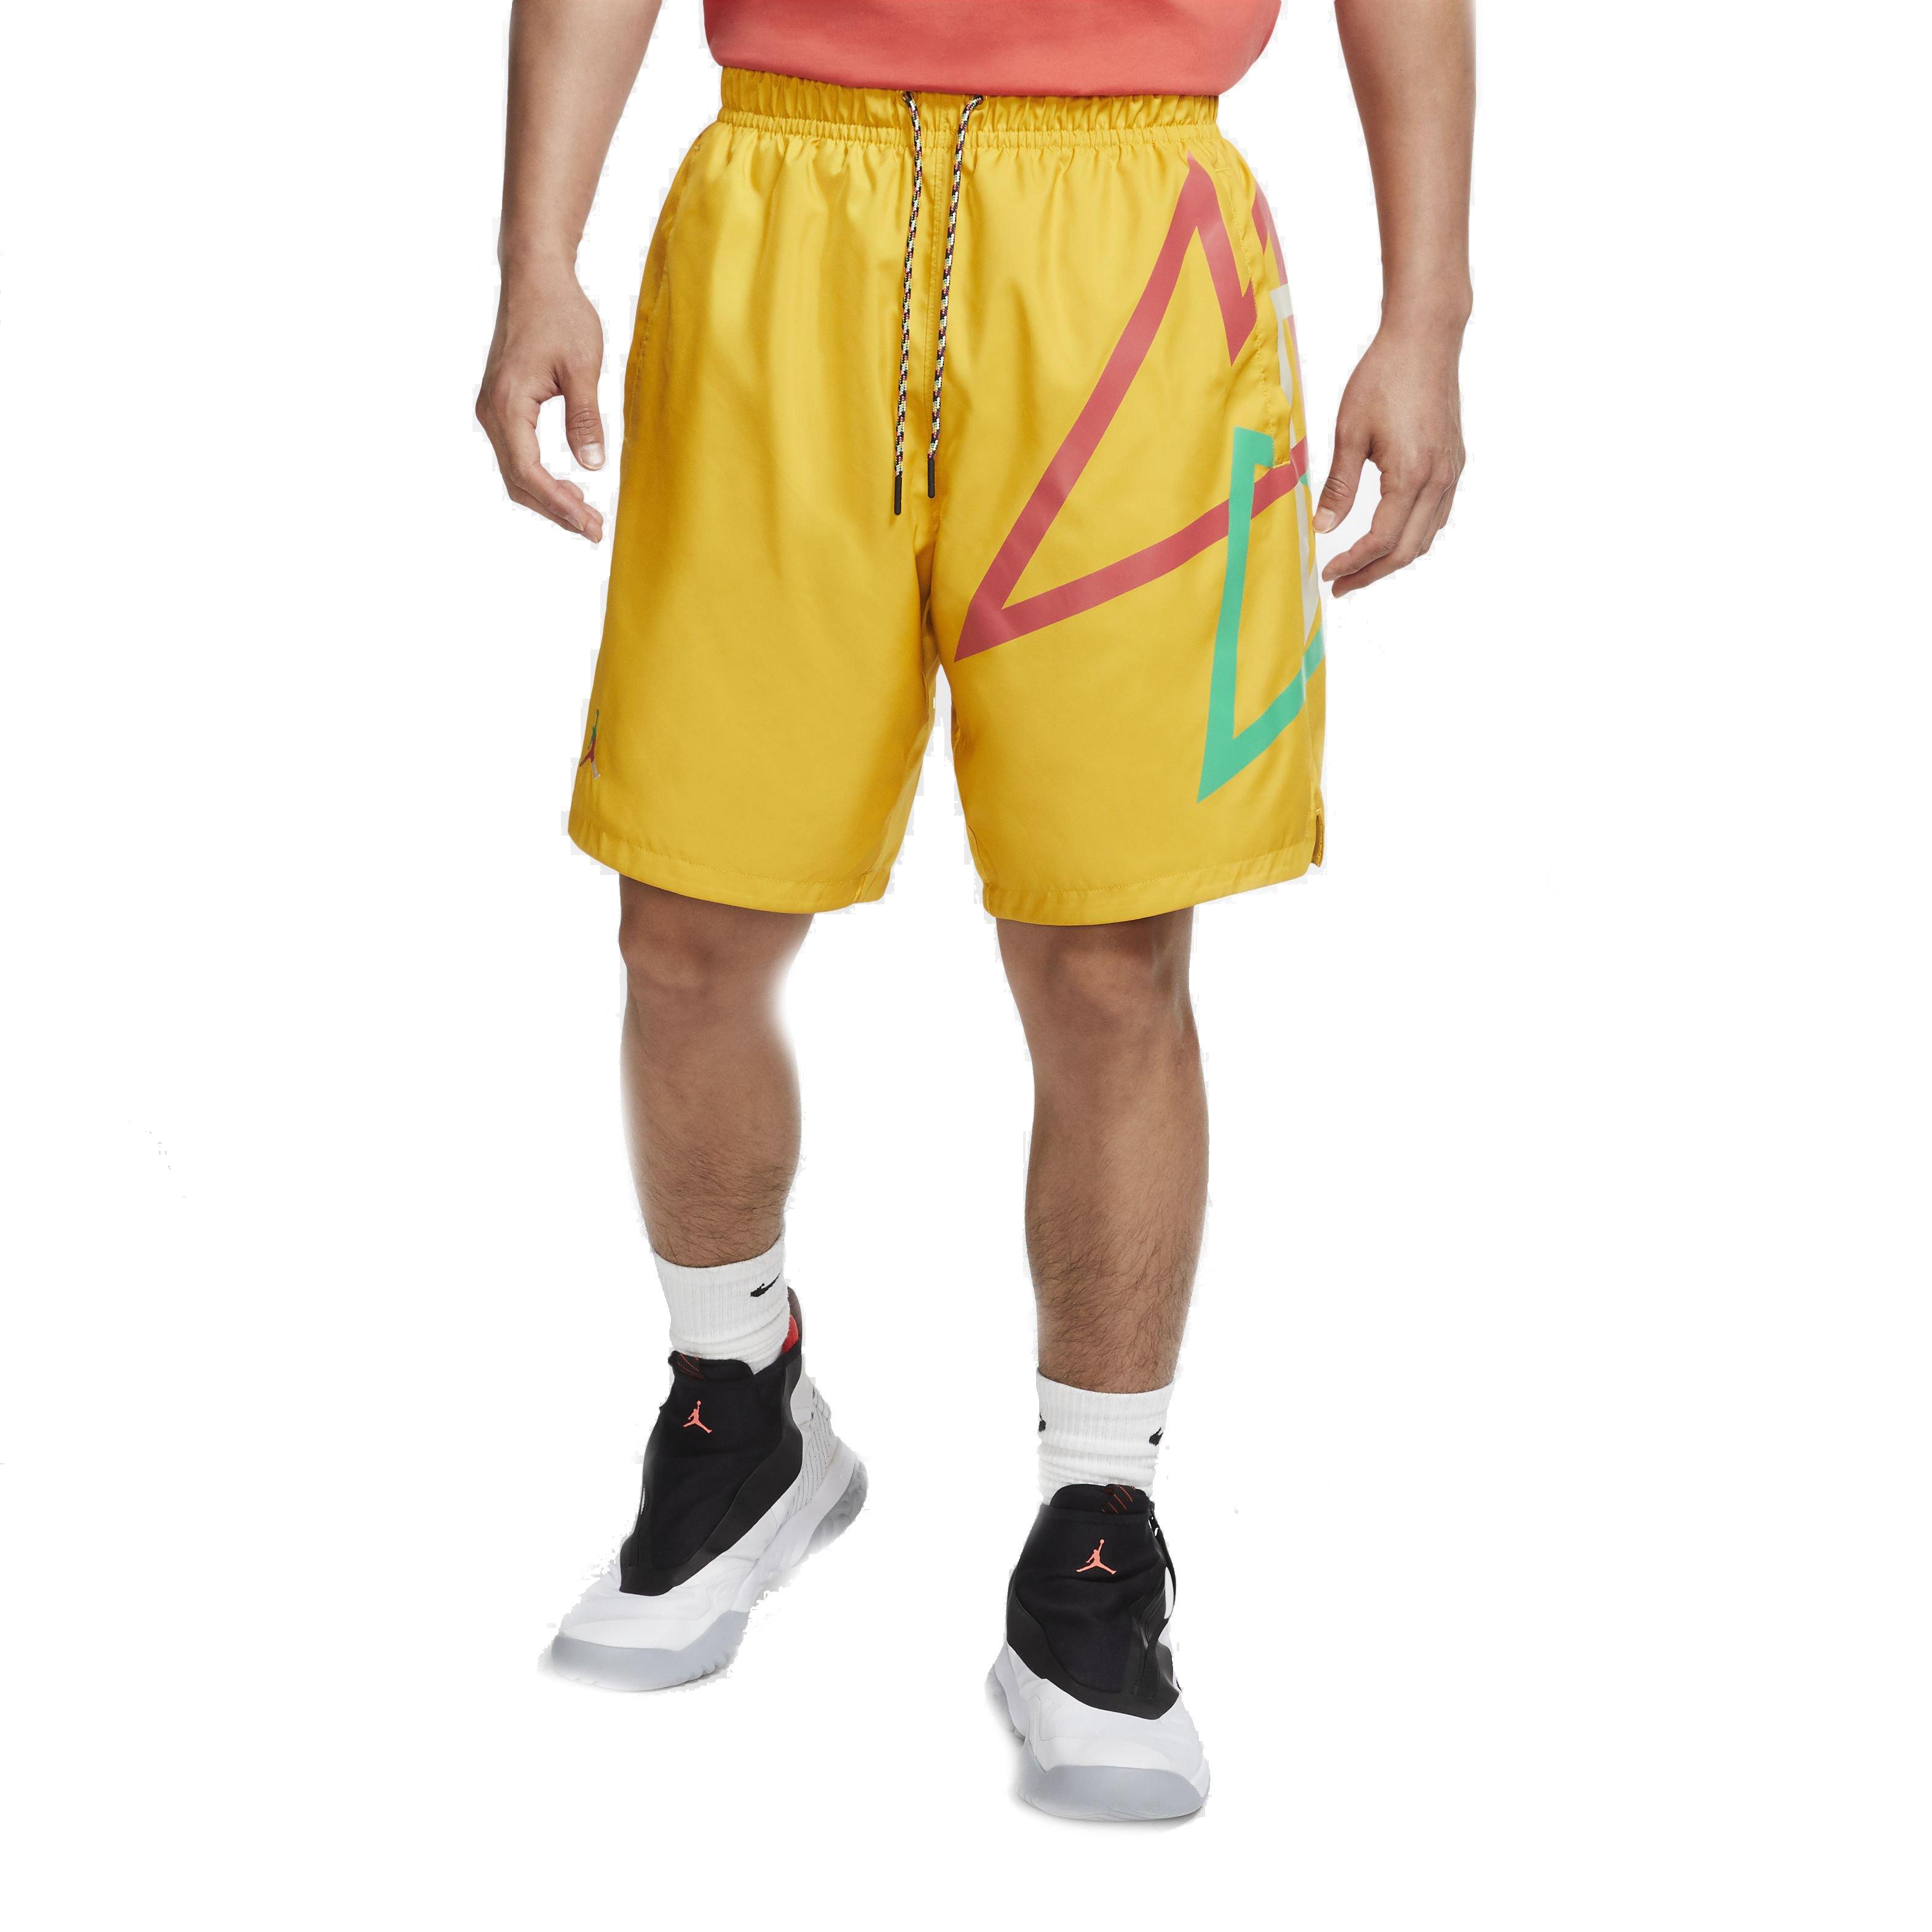 hibbett sports jordan shorts